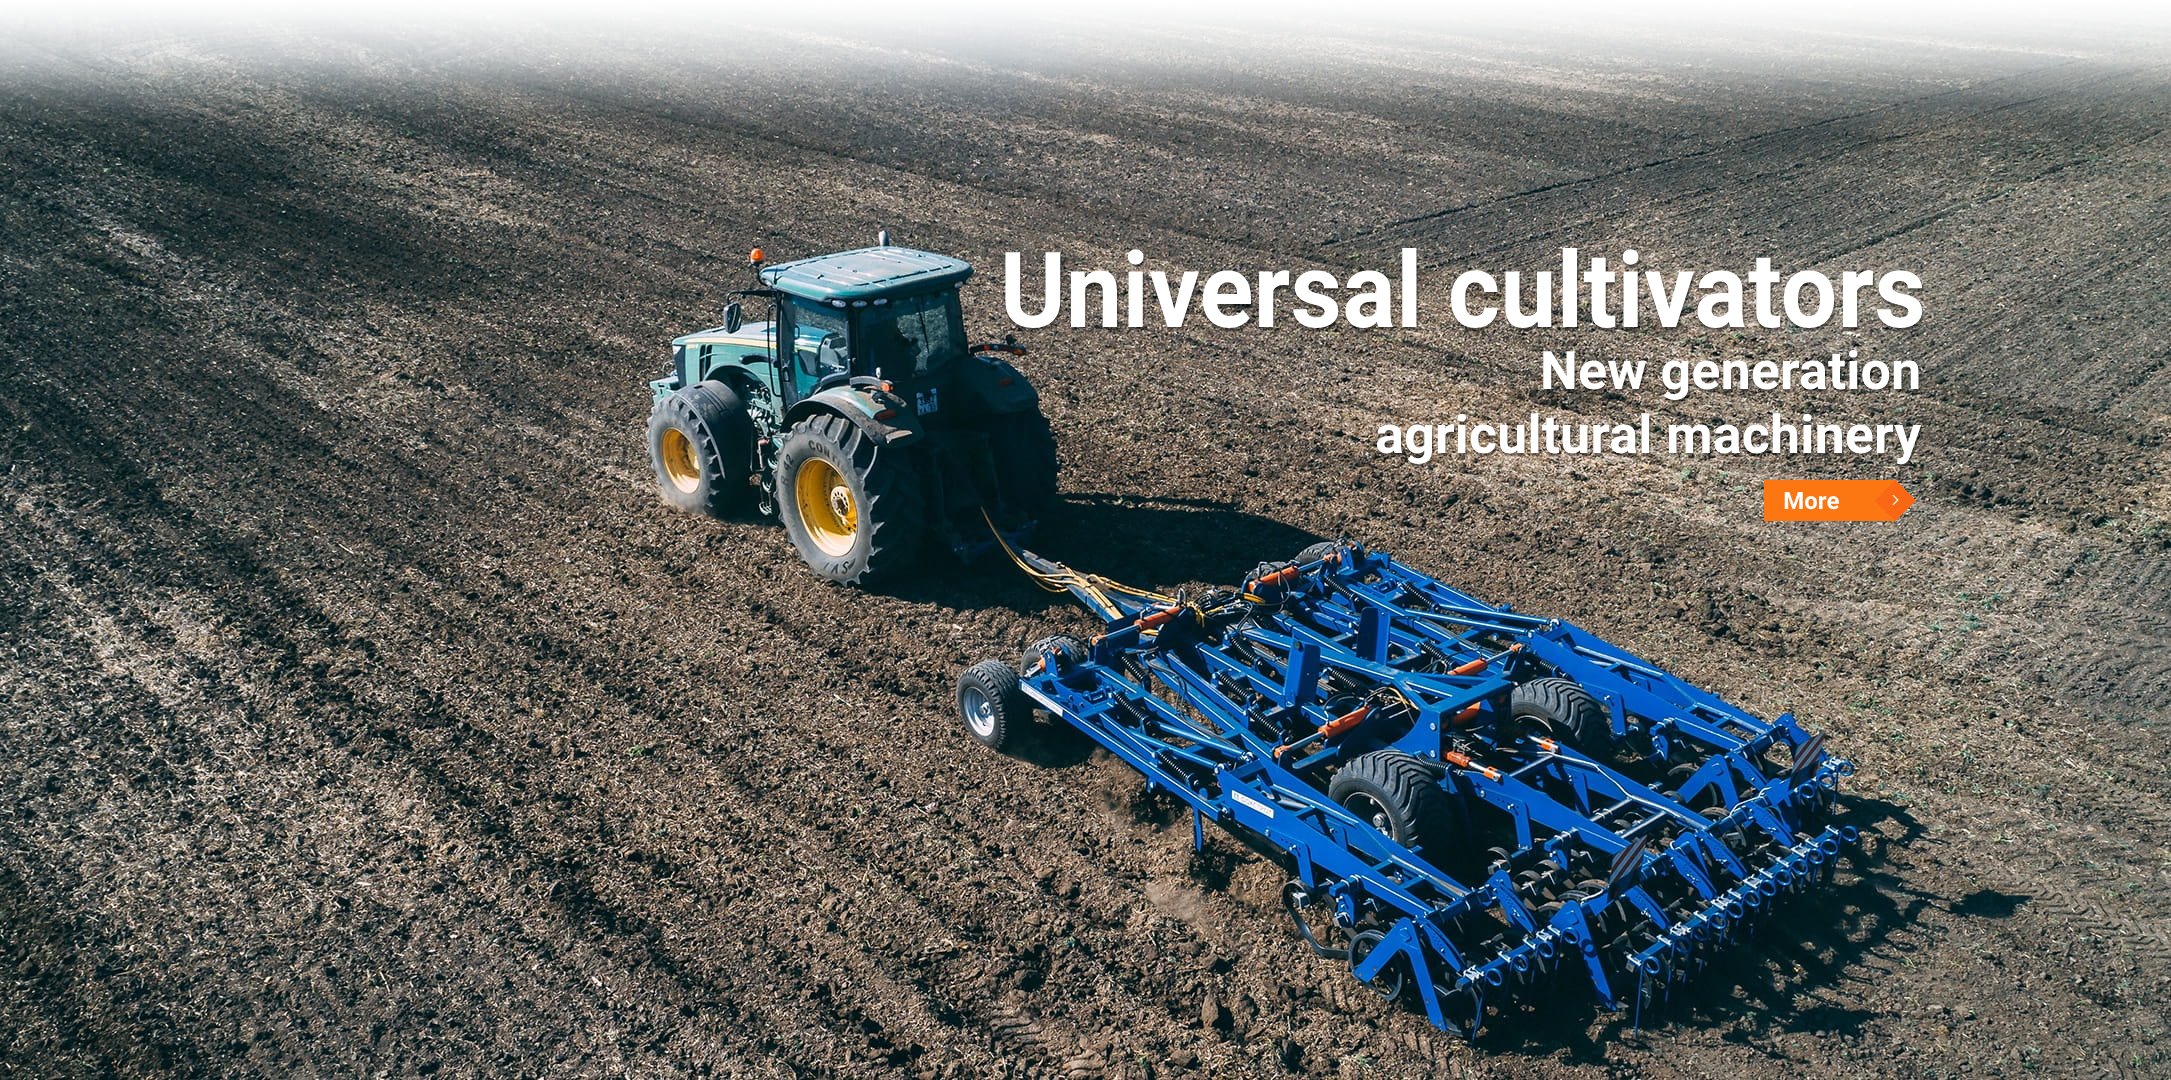 Universal cultivators